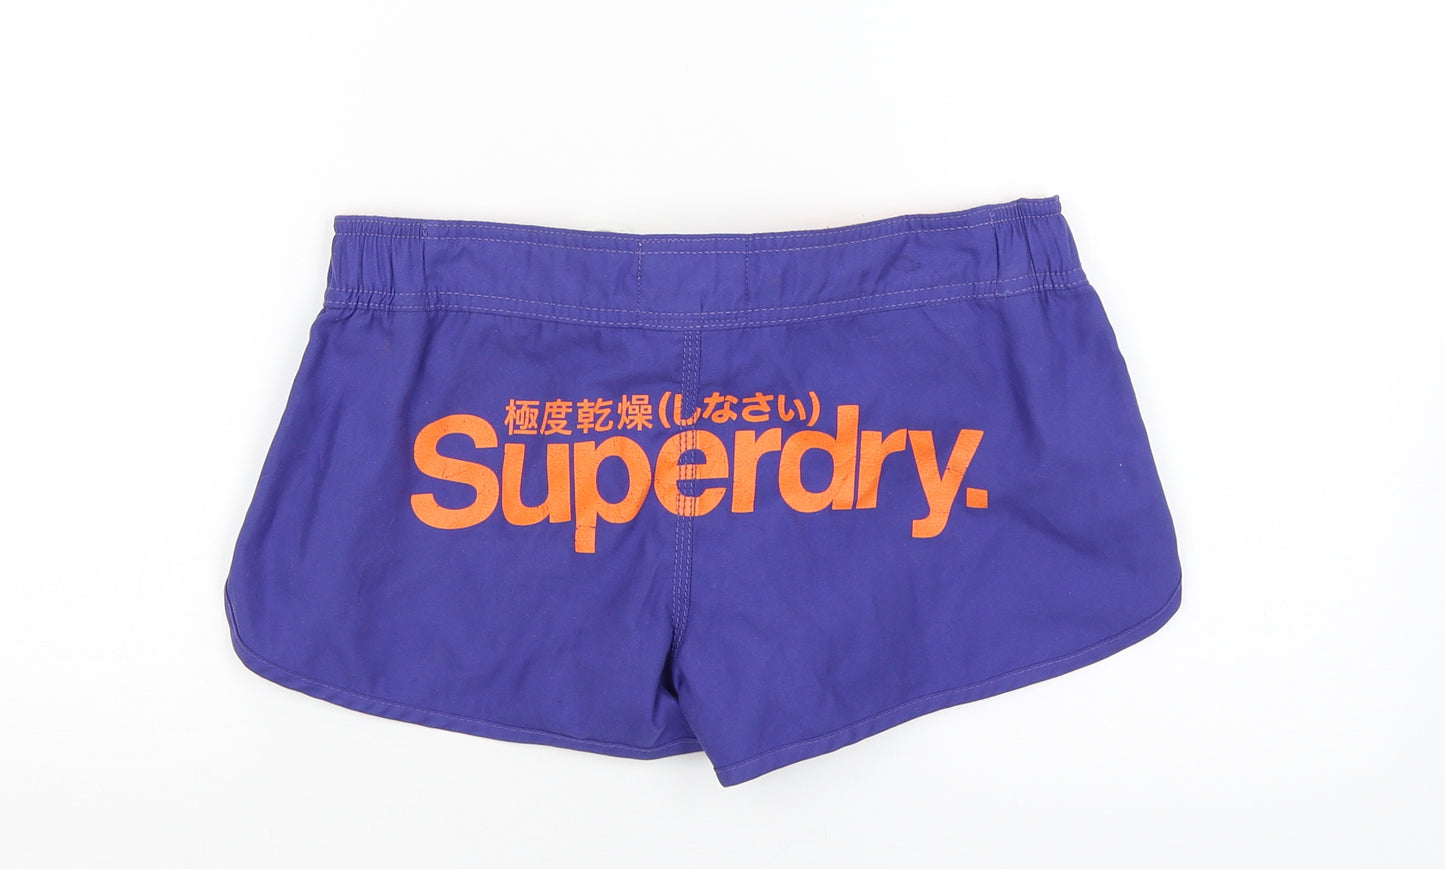 Superdry Mens Blue   Cargo Shorts Size S - Swim